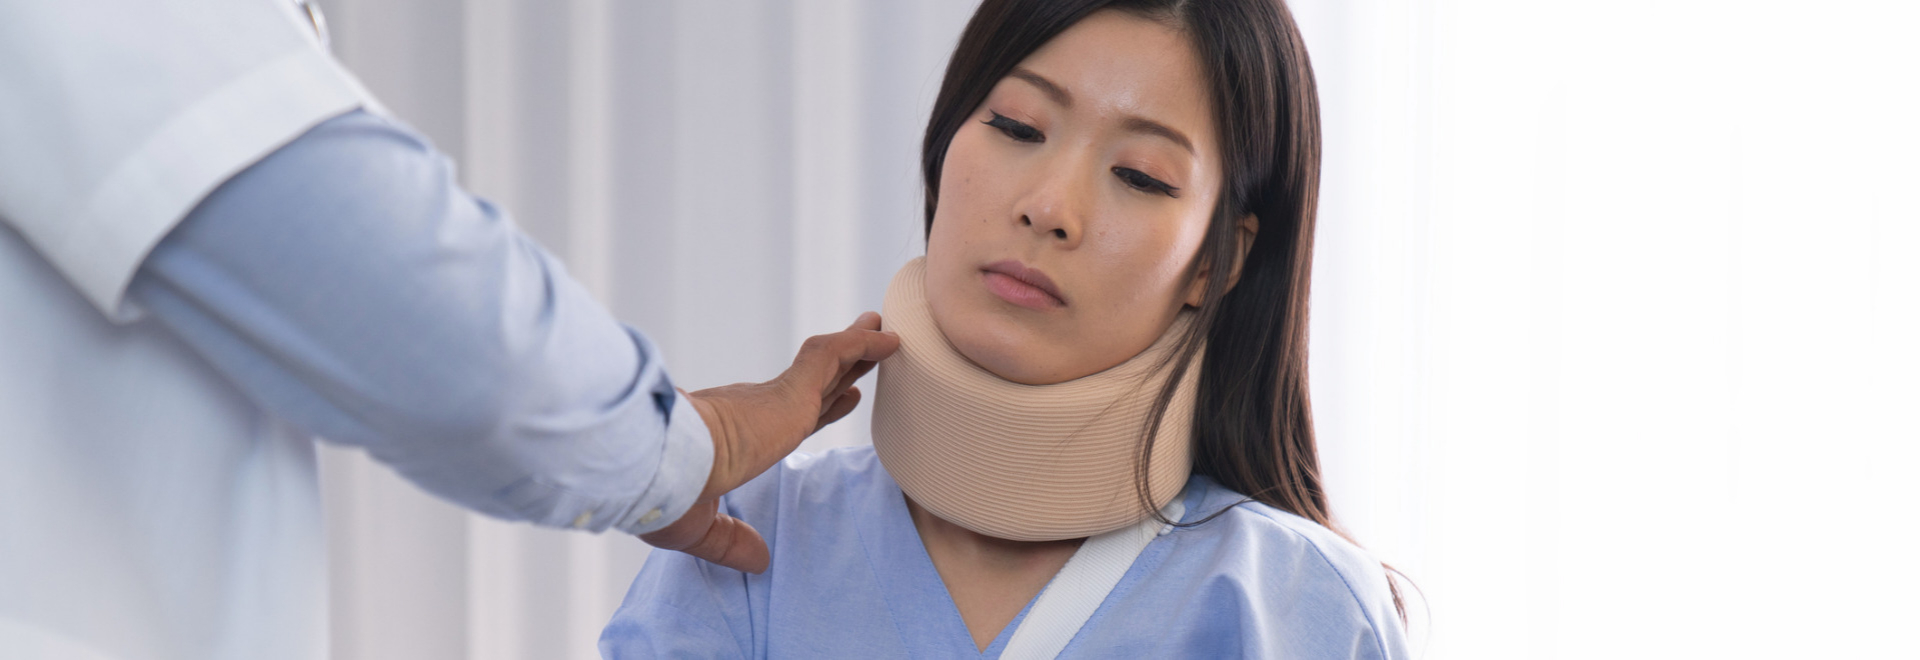 neck-injuries-causes-symptoms-treatment